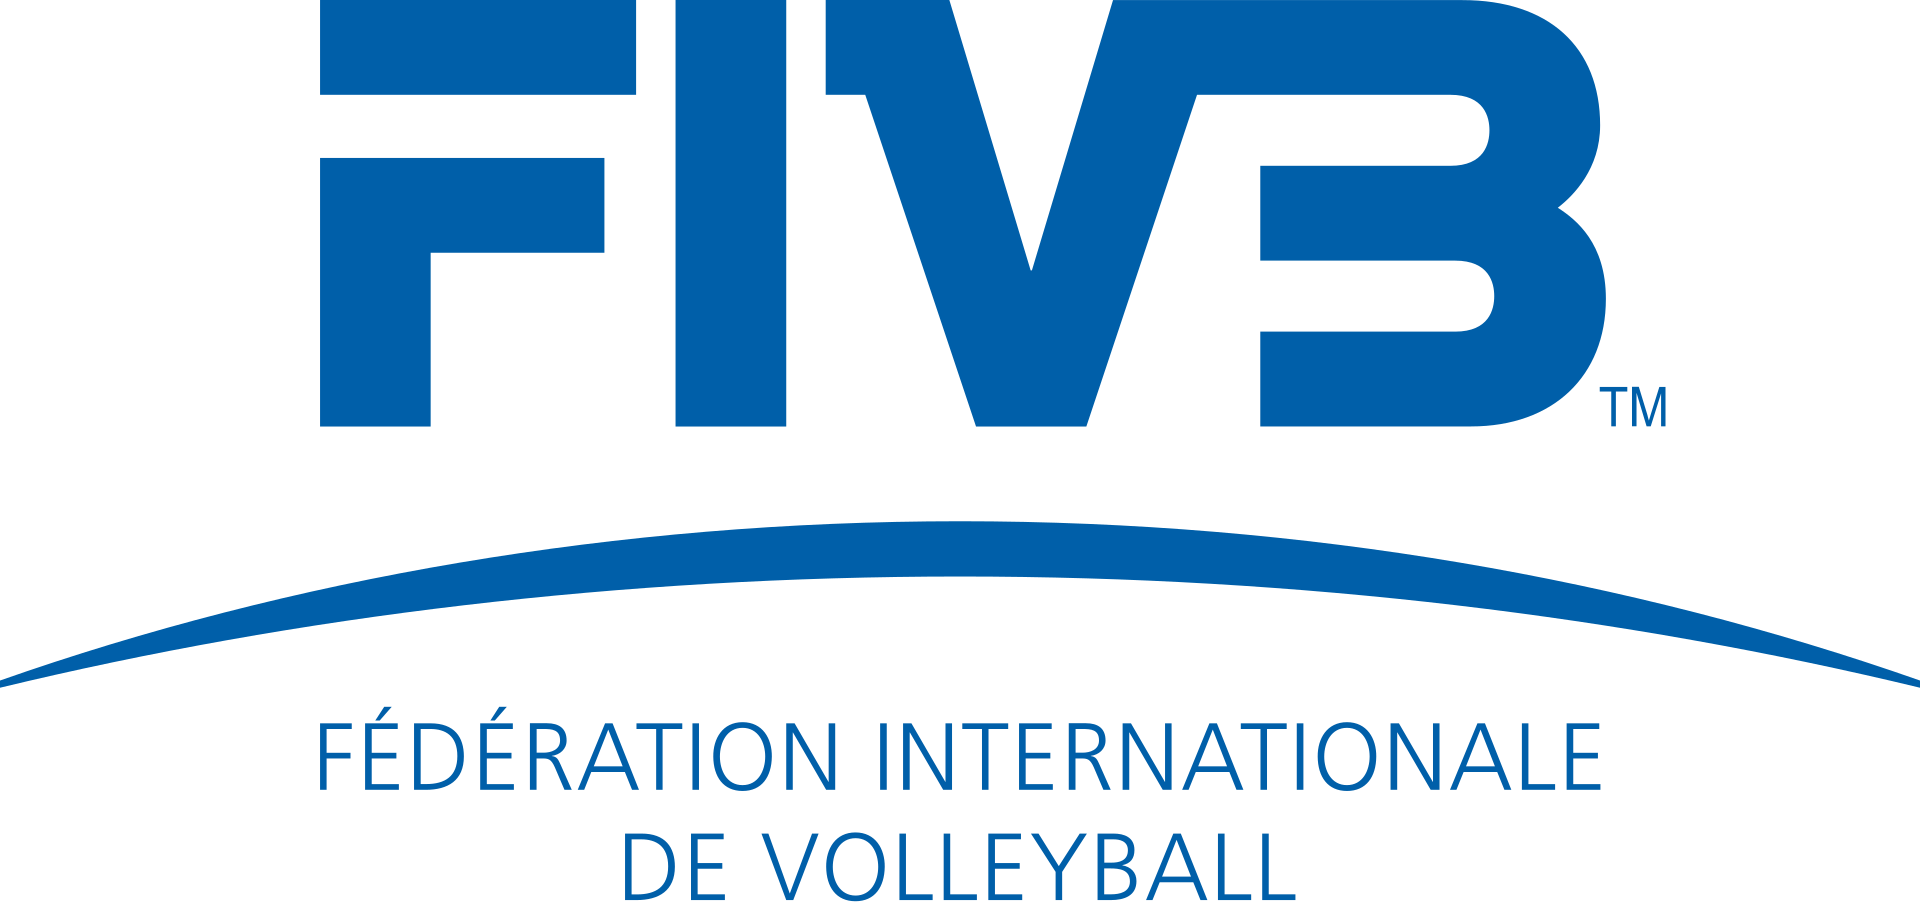 International Volleyball Federation (FIVB)